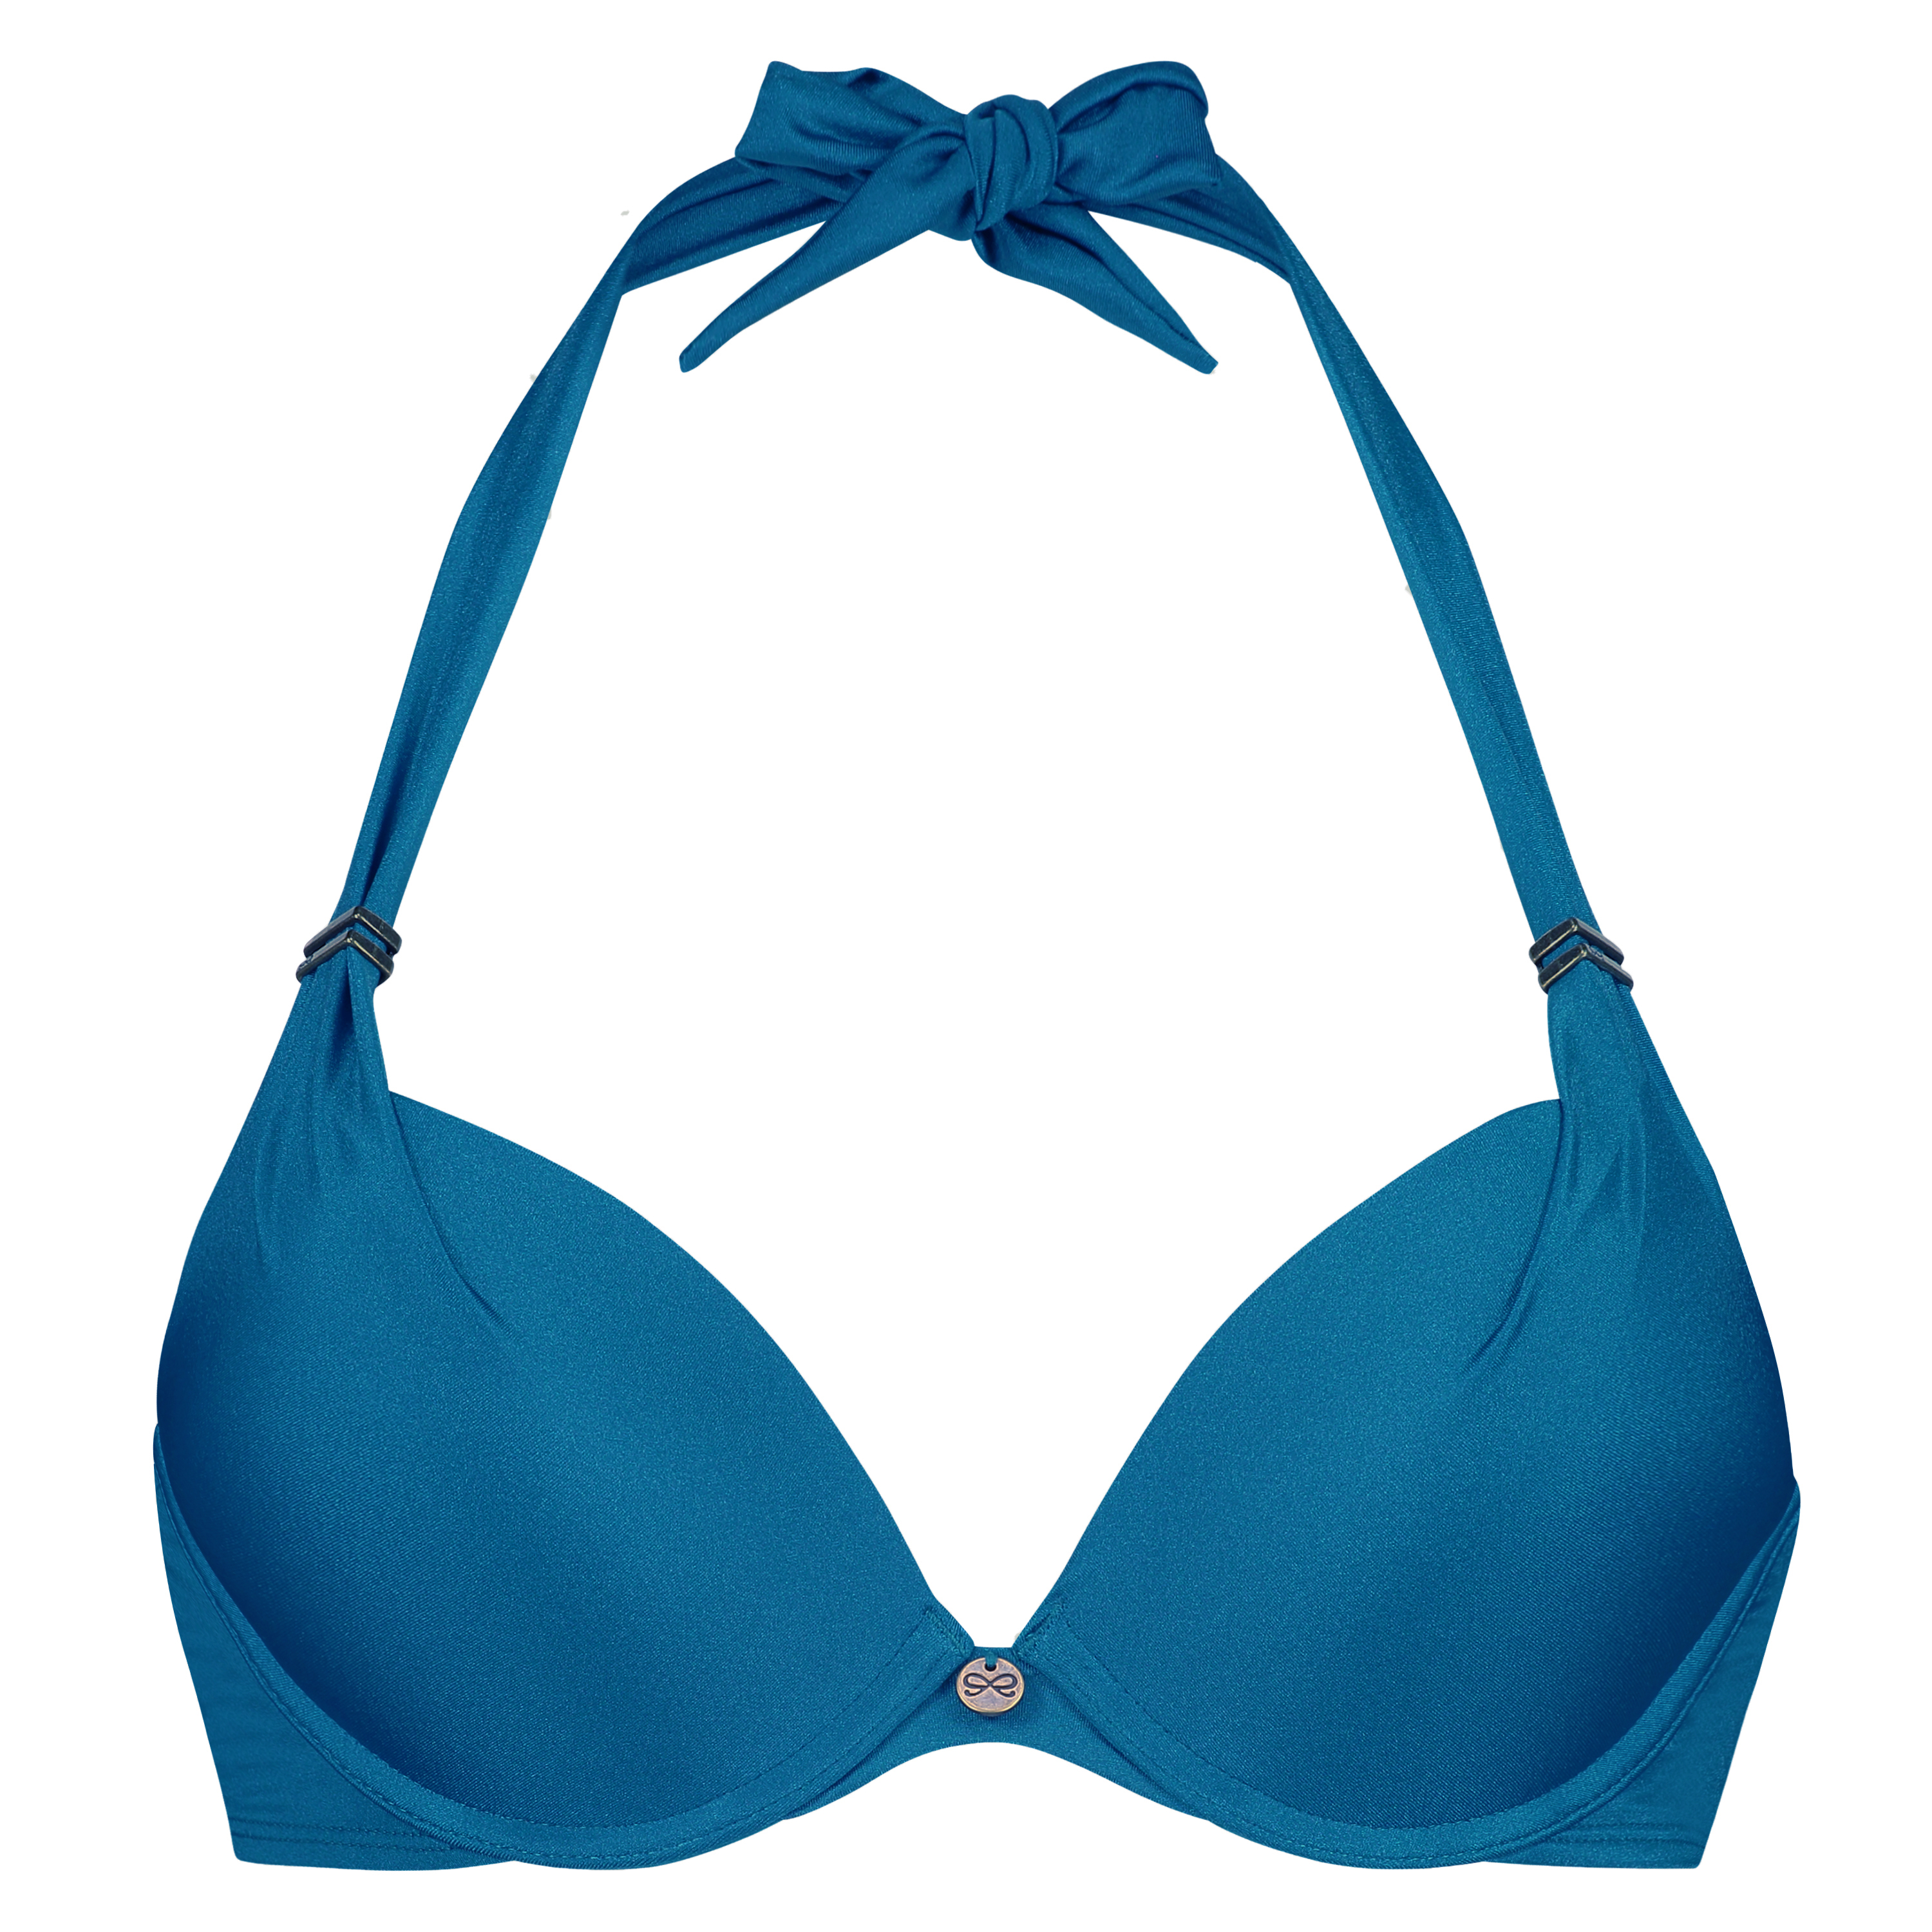 Top de bikini push-up preformado Sunset Dream Copa A - E, Azul, main